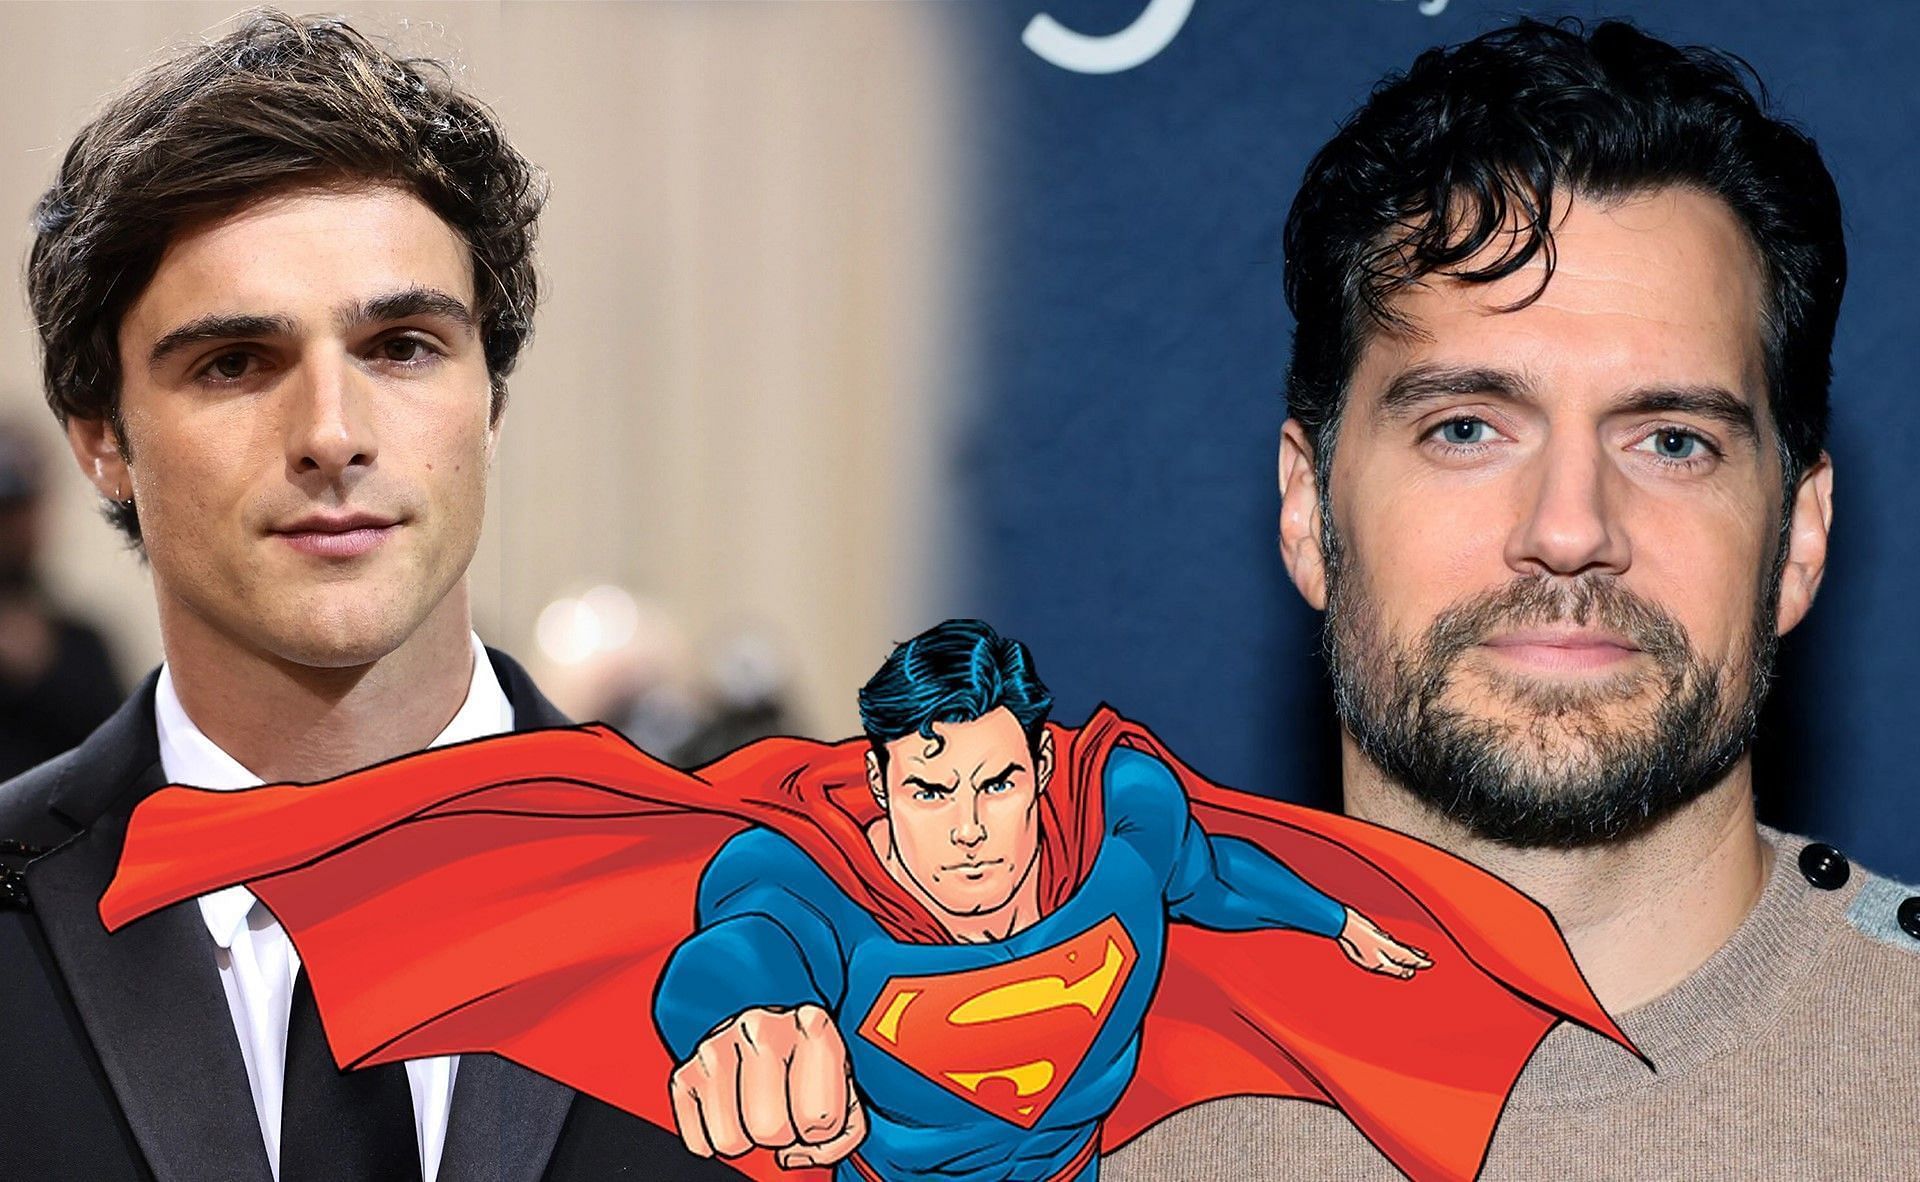 Is Jacob Elordi replacing Henry Cavill as Superman? (Image via Sportskeeda)